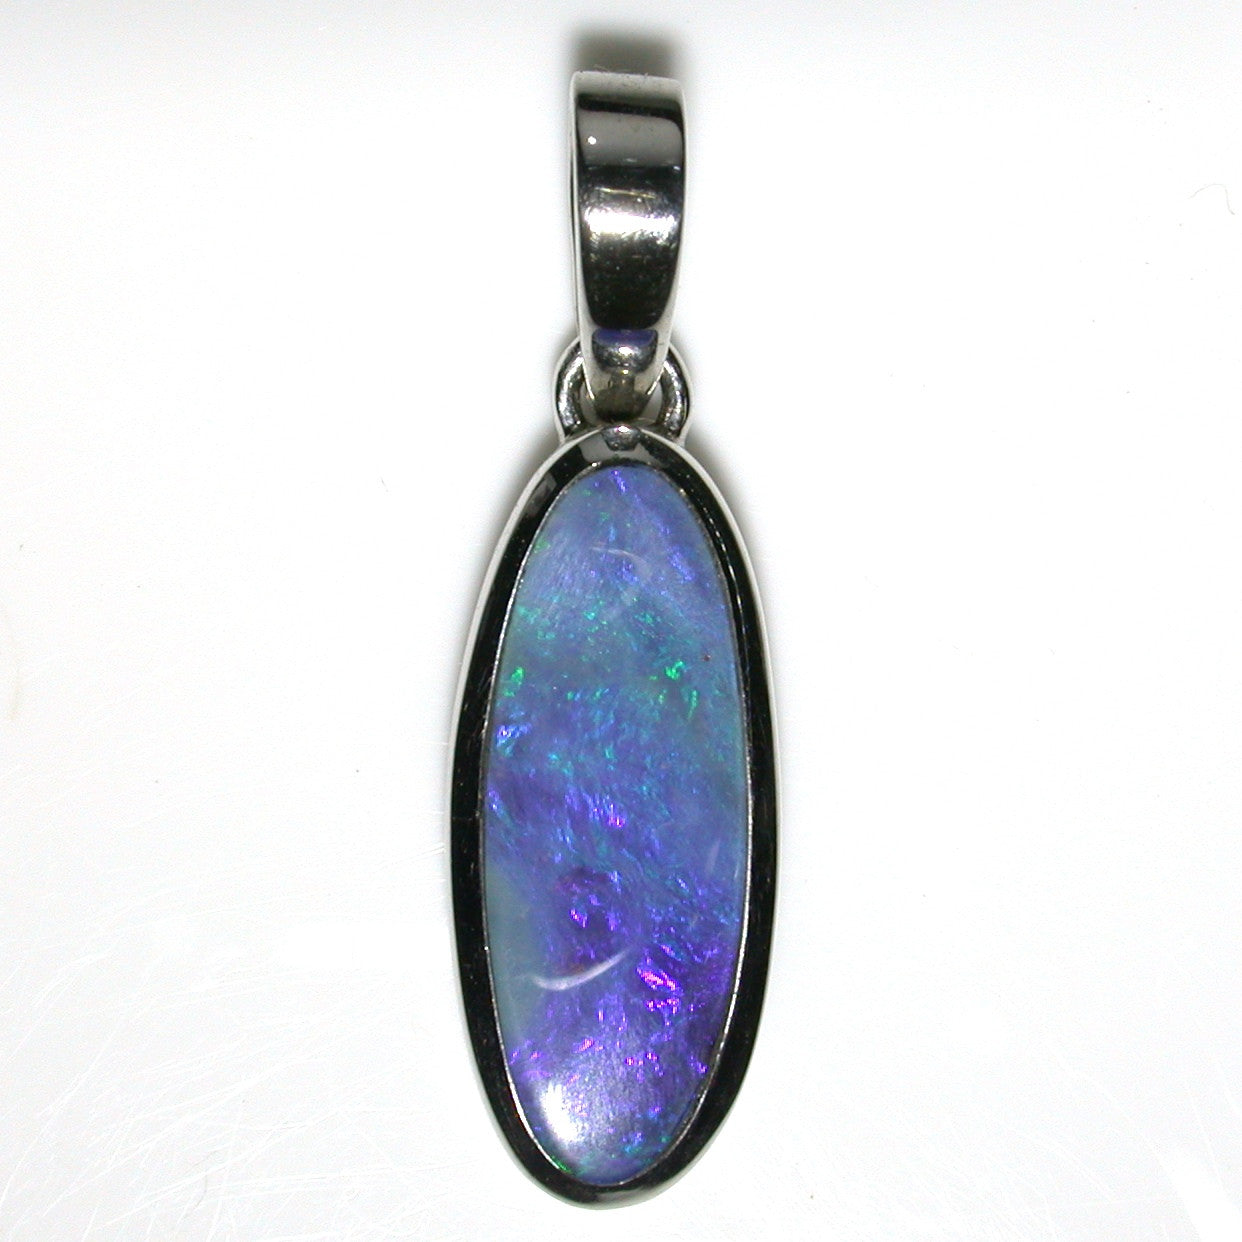 Blue solid boulder opal pendant